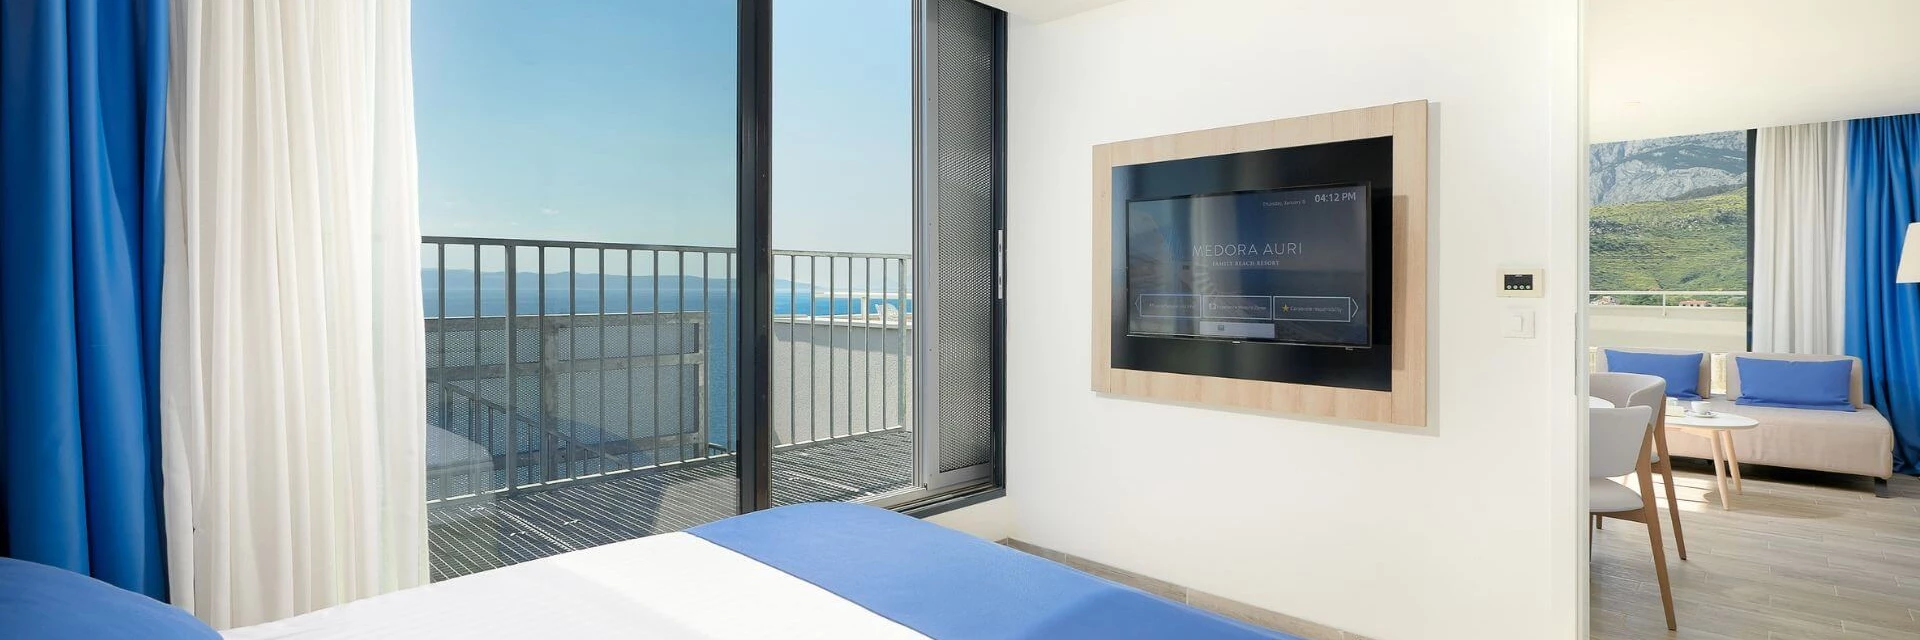 Deluxe Suite - direct sea view - rooftop terrace